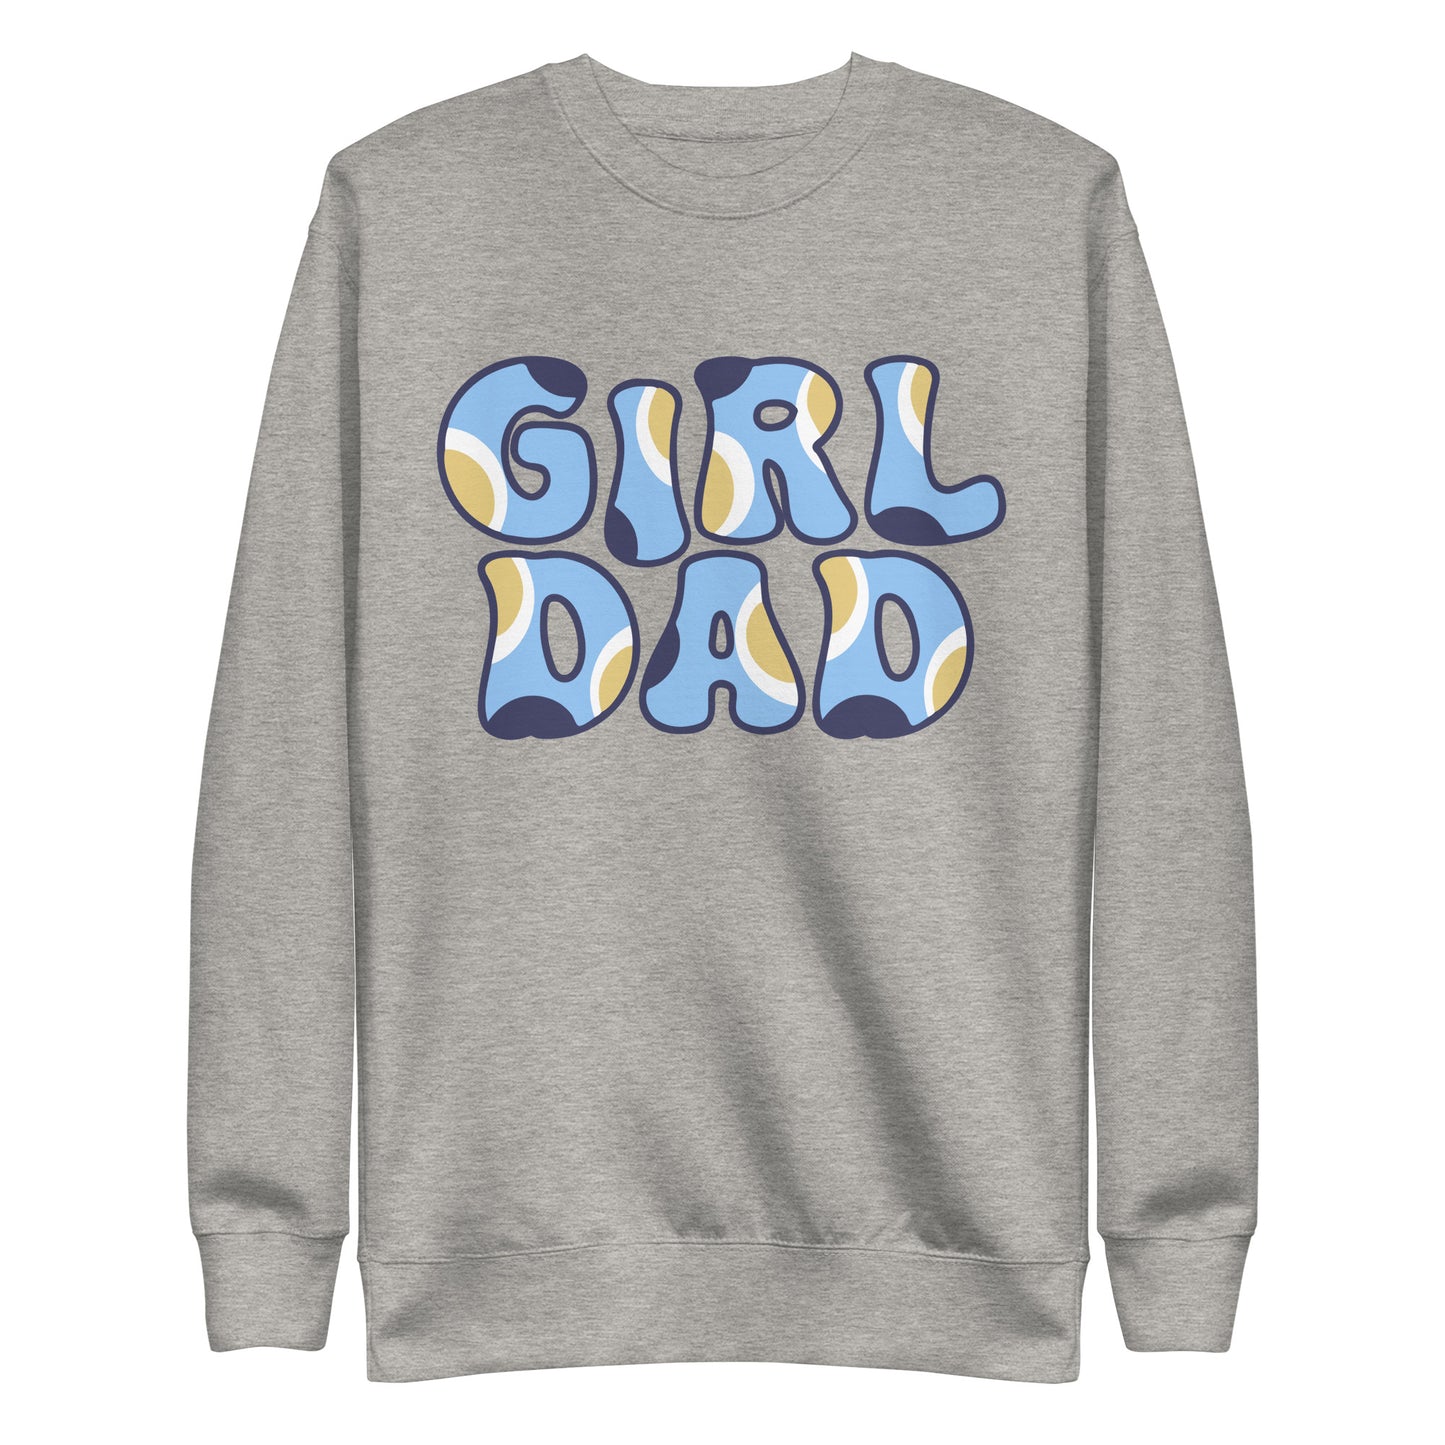 Girl Dad Blue Dog Men's Crewneck Sweatshirt